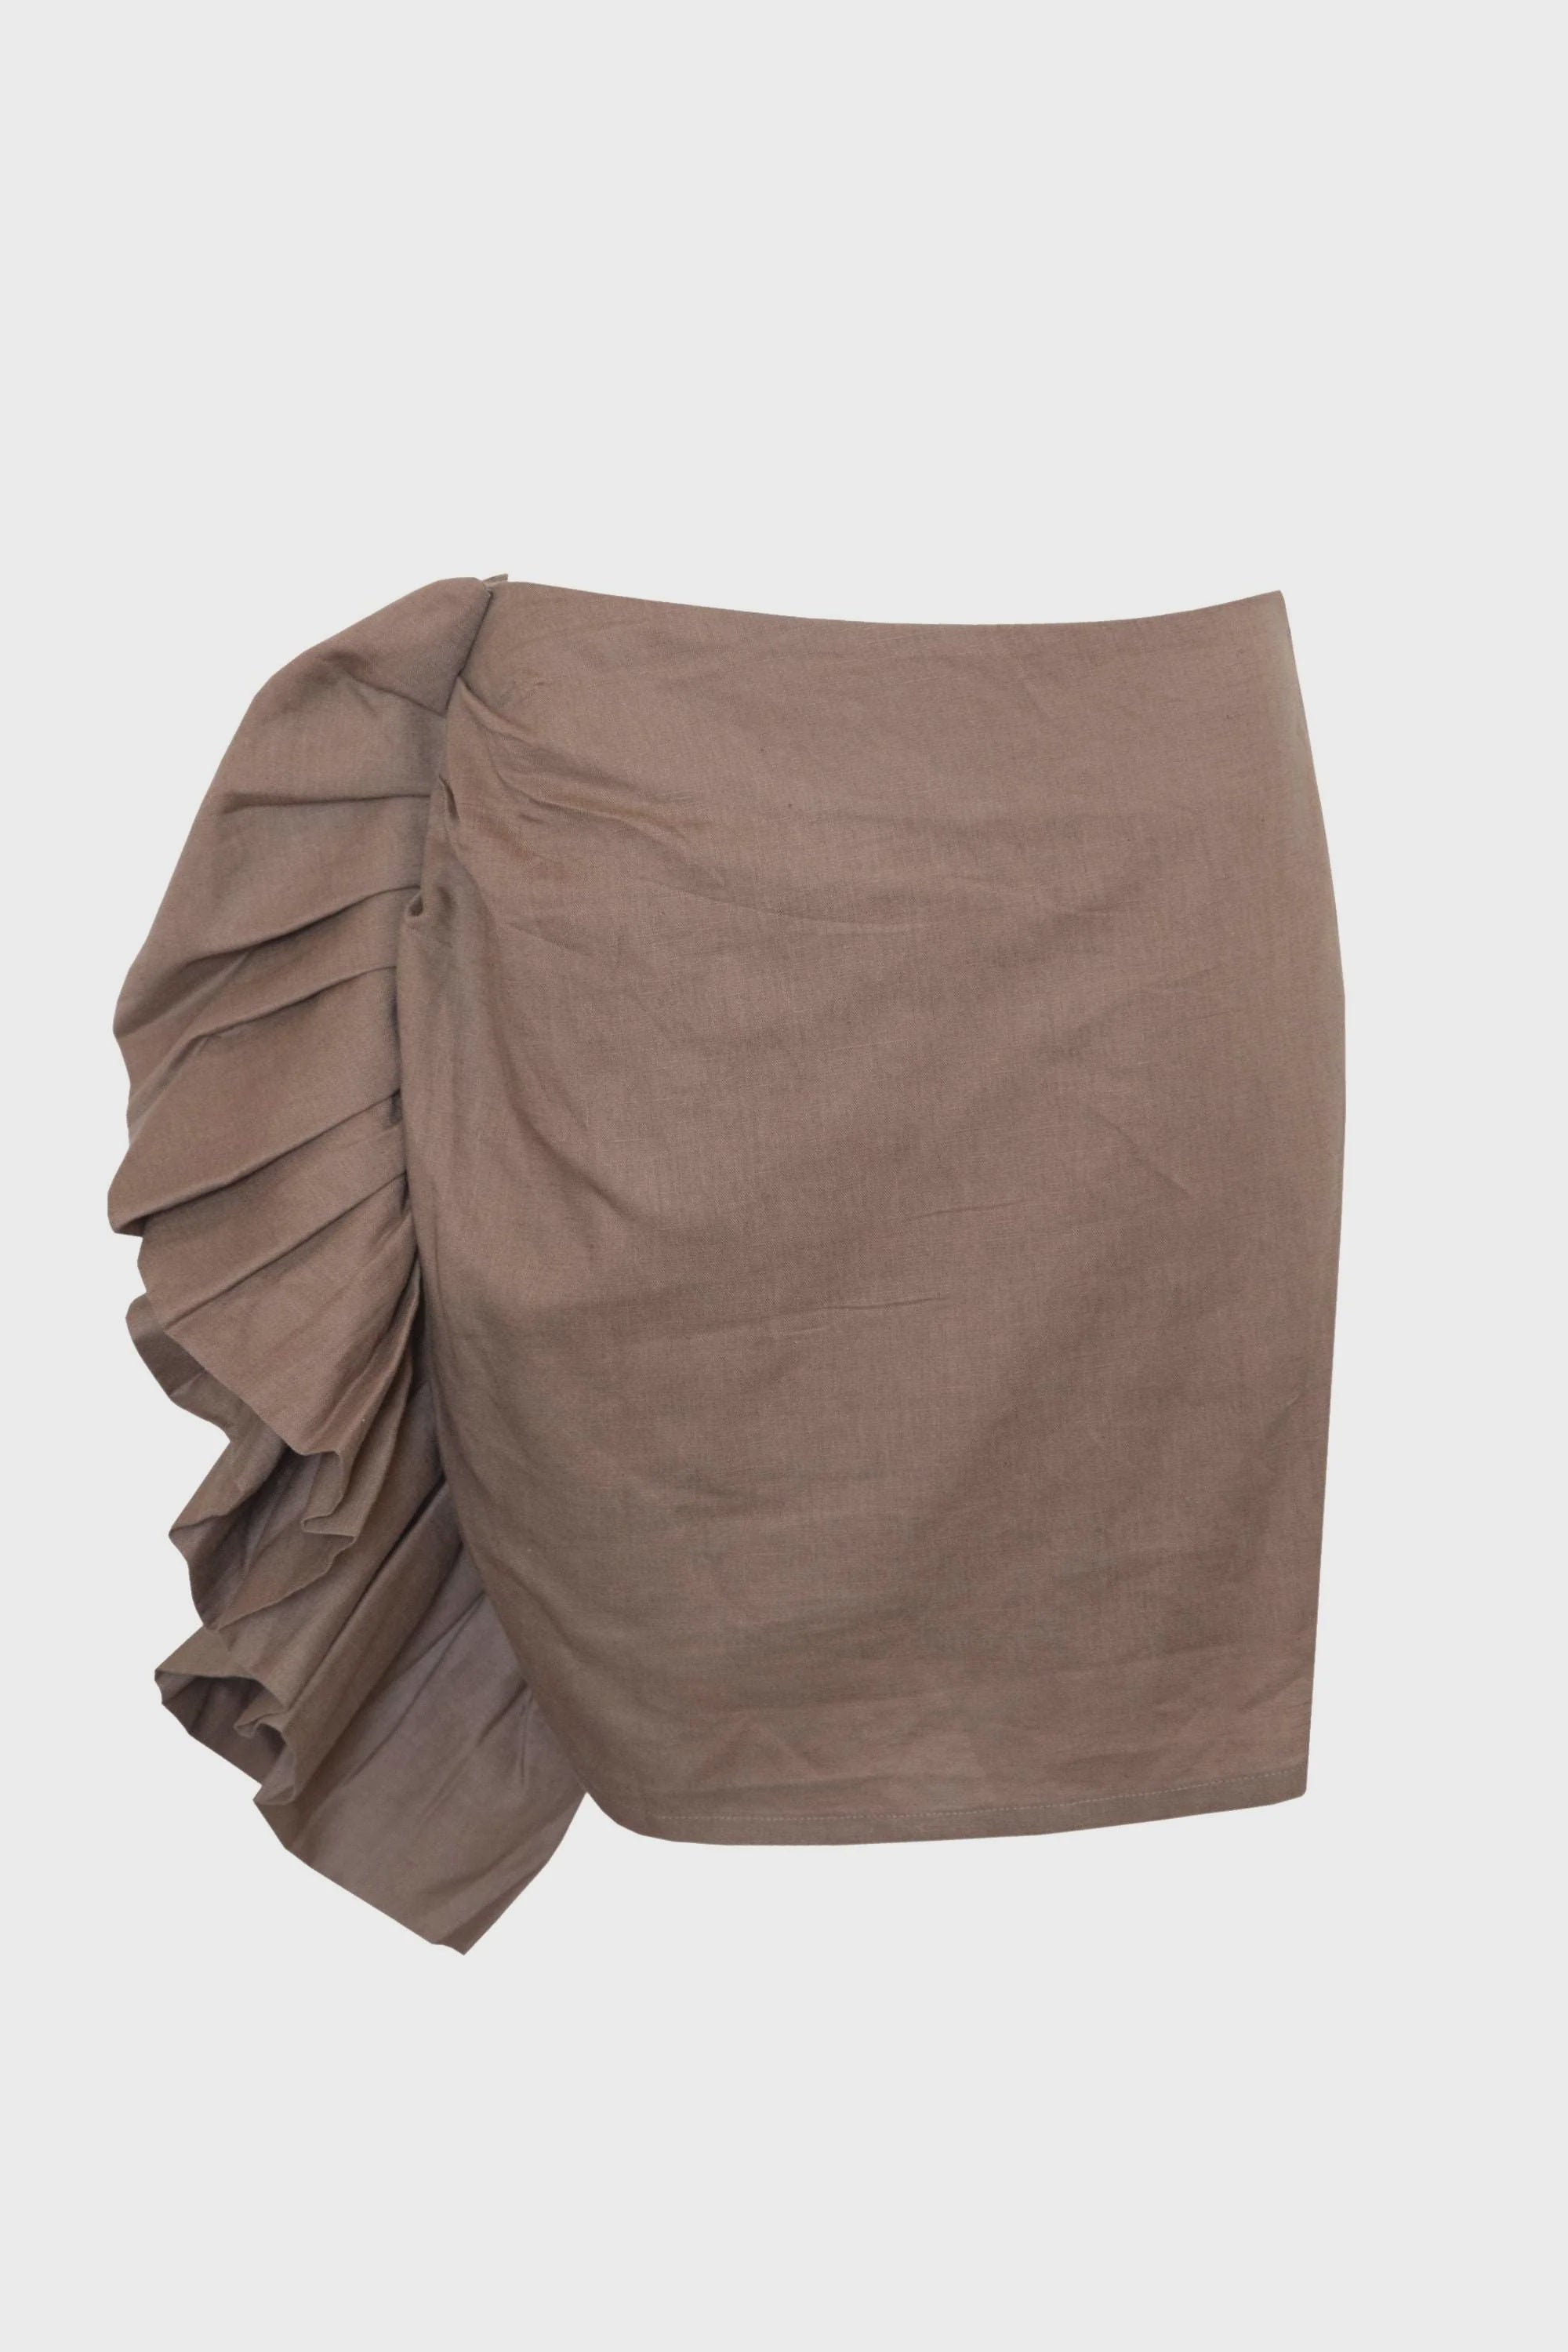 Brown Linen Skirt with Waterfall Ruffle